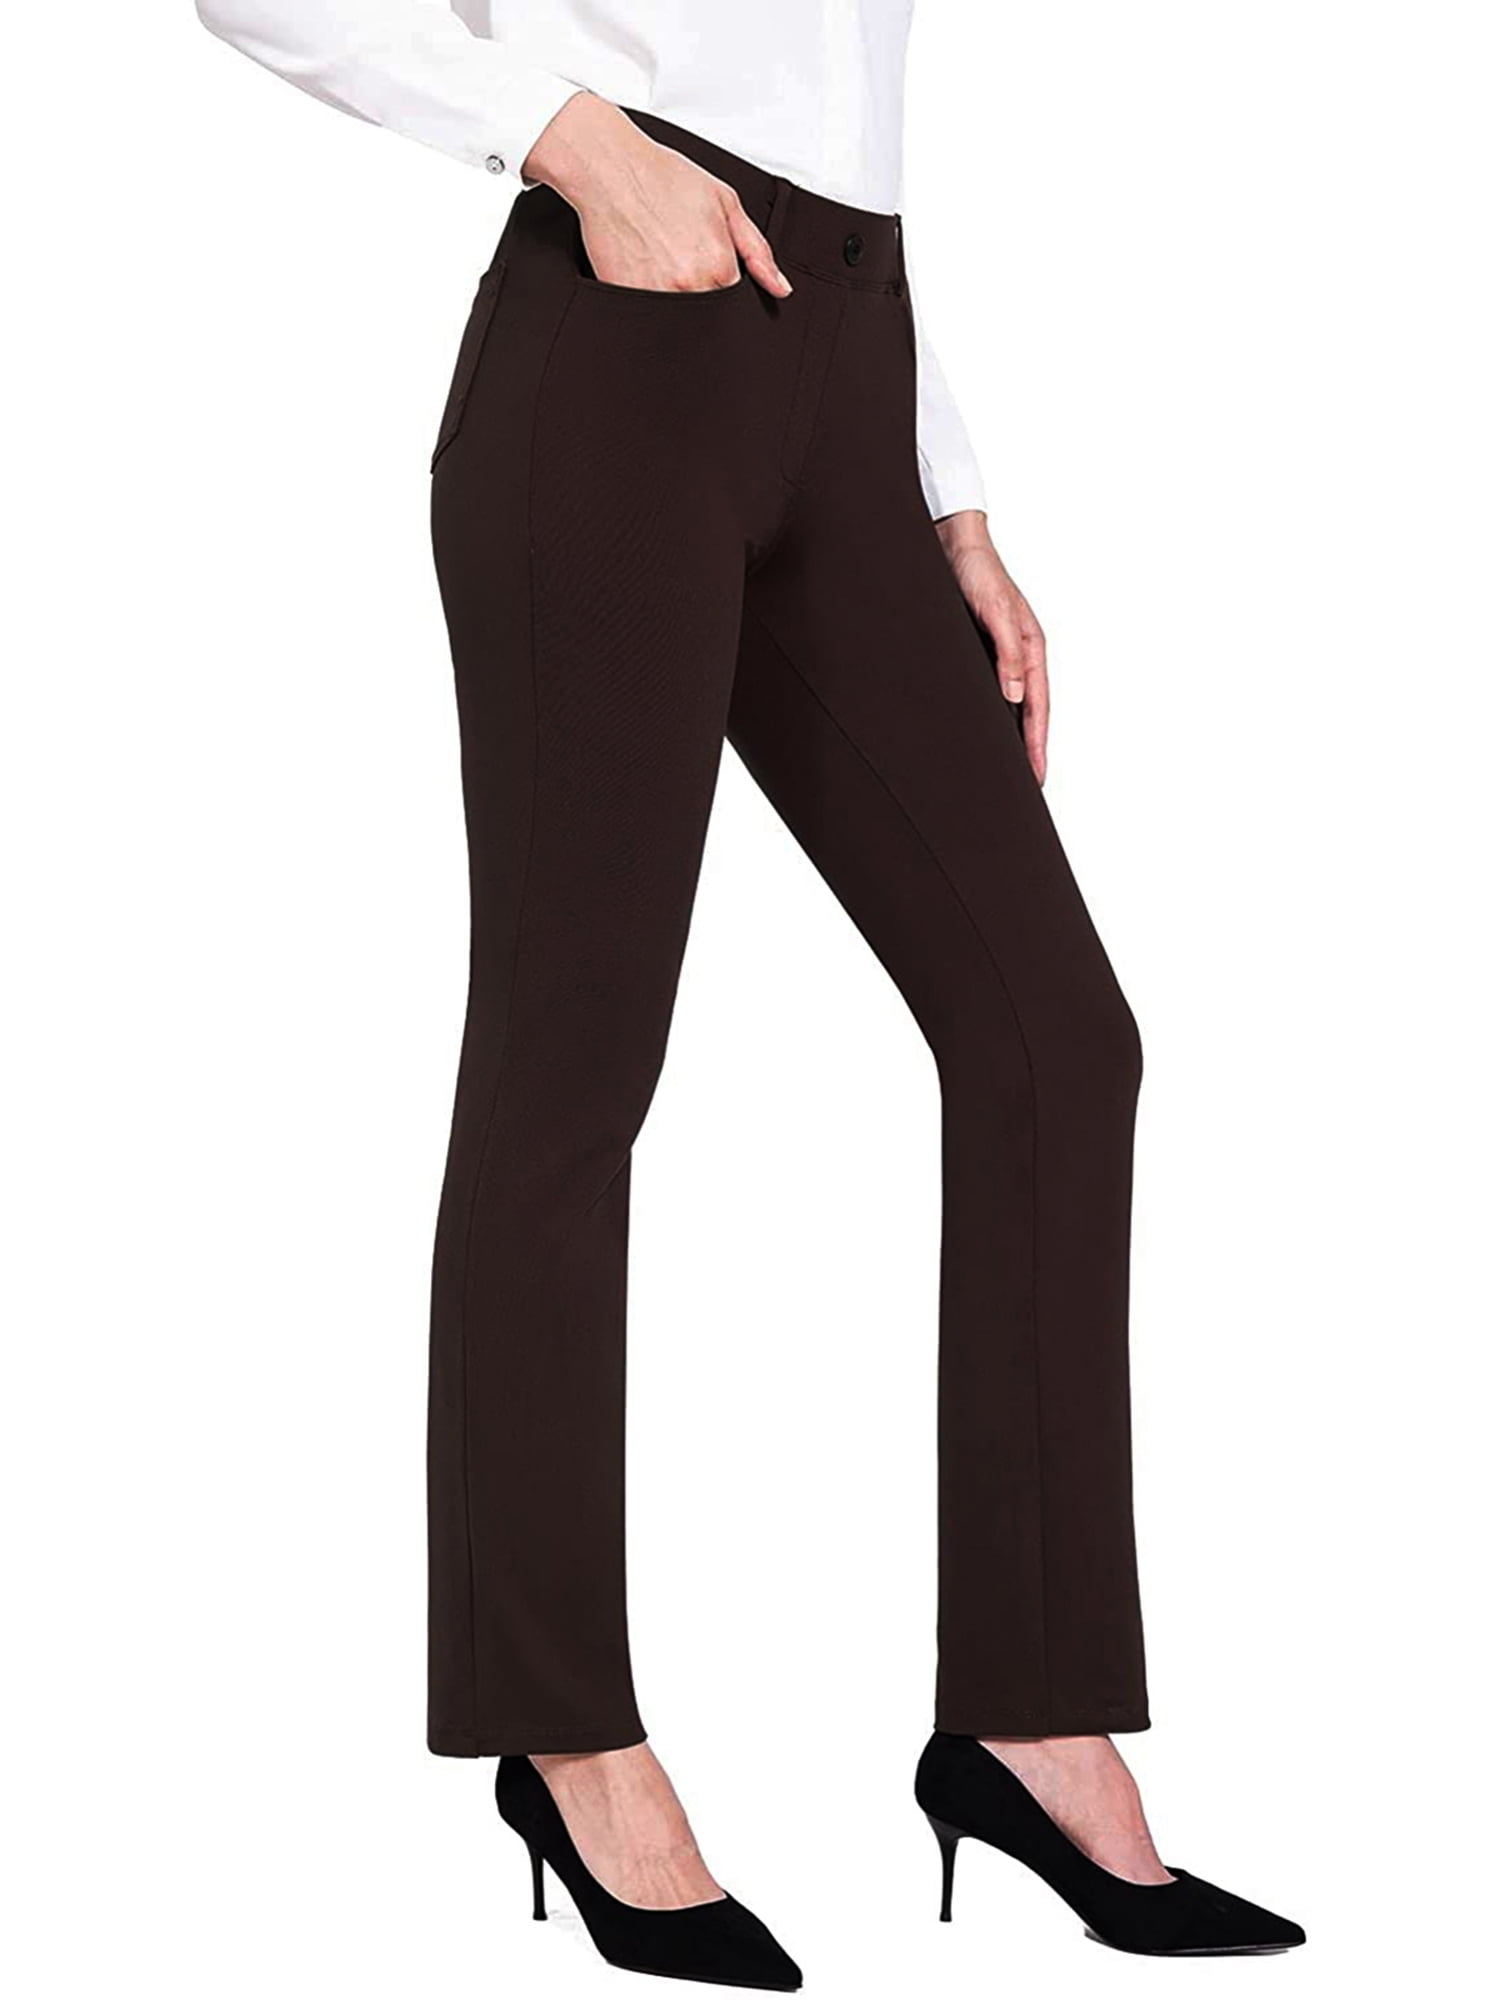 xkwyshop Women Yoga Dress Pants Stretchy Work Pants Straightleg Office  Slacks with Pockets for Business Casual Petite Black 